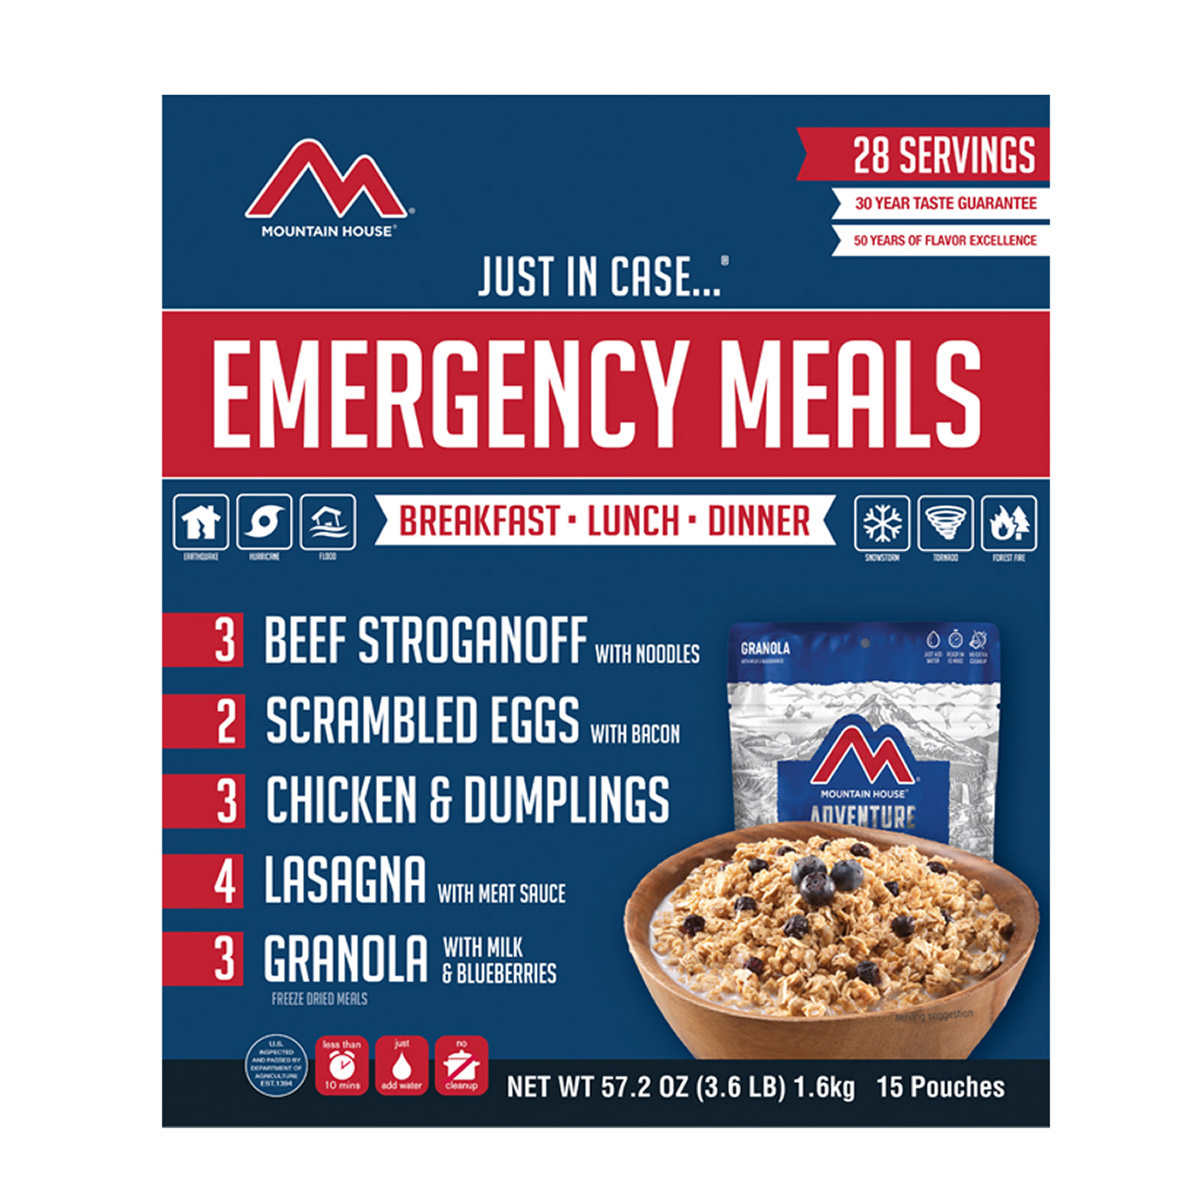 Mountain House Emergency Meal Kit - 15 packs (28 servings) $79.99